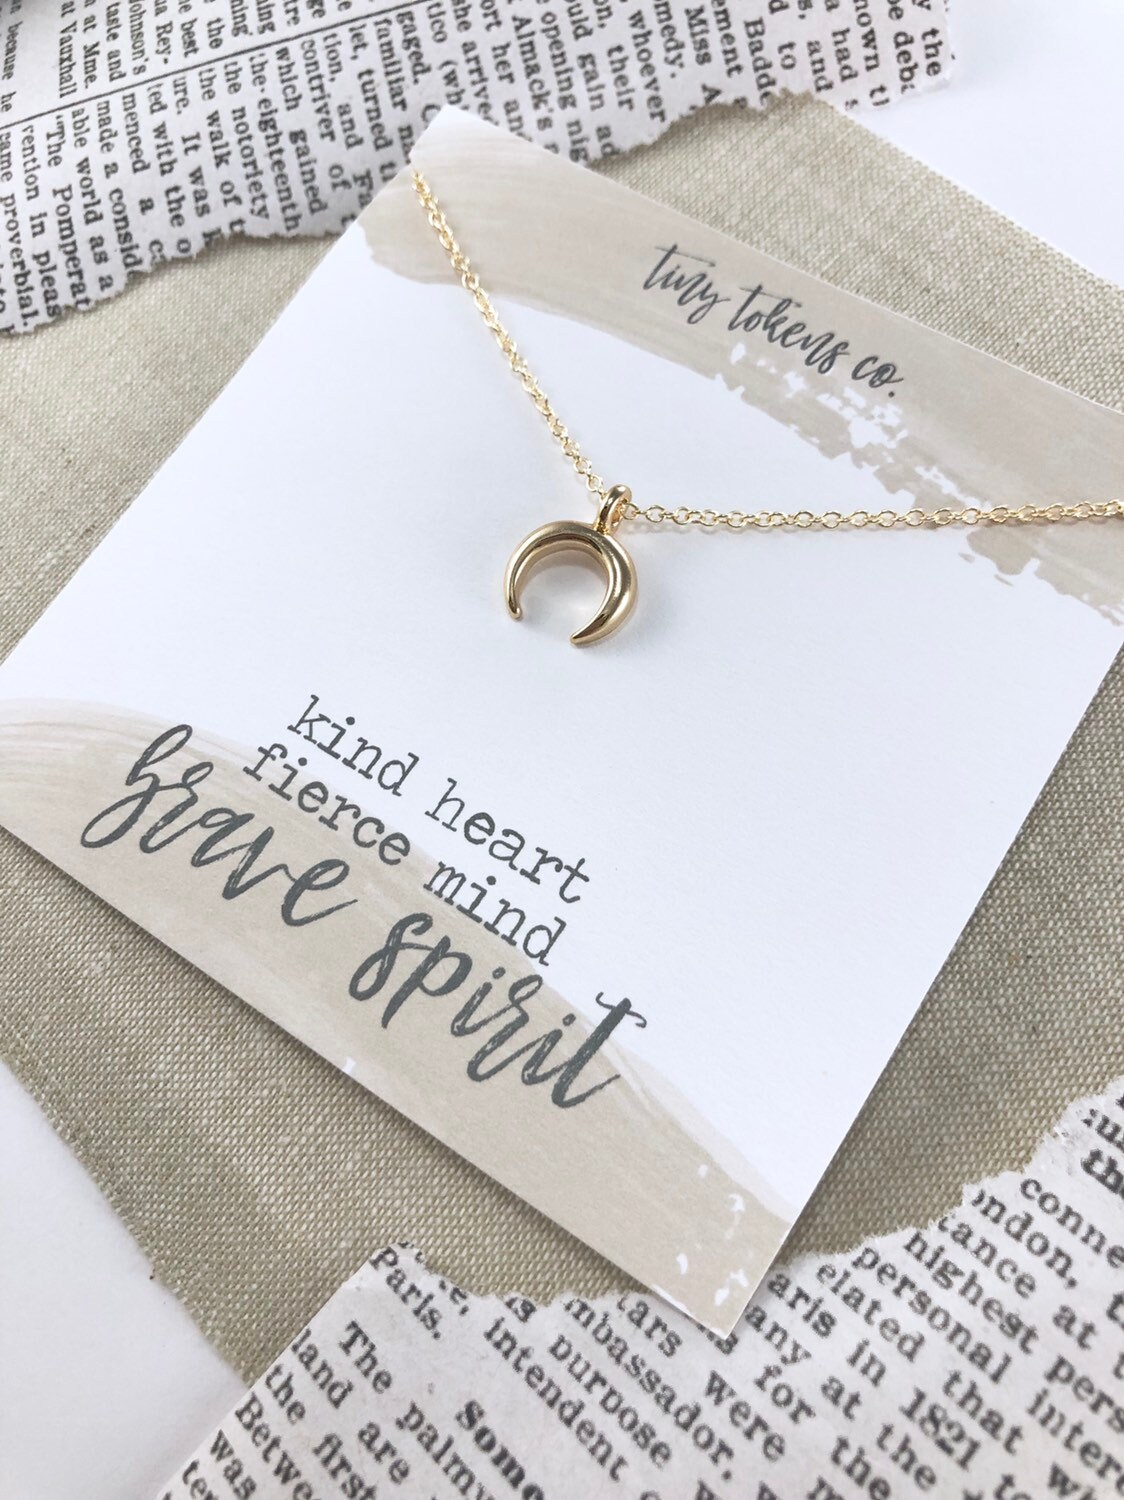 Kind Heart Fierce Mind Brave Spirit - Beach Stone Necklace